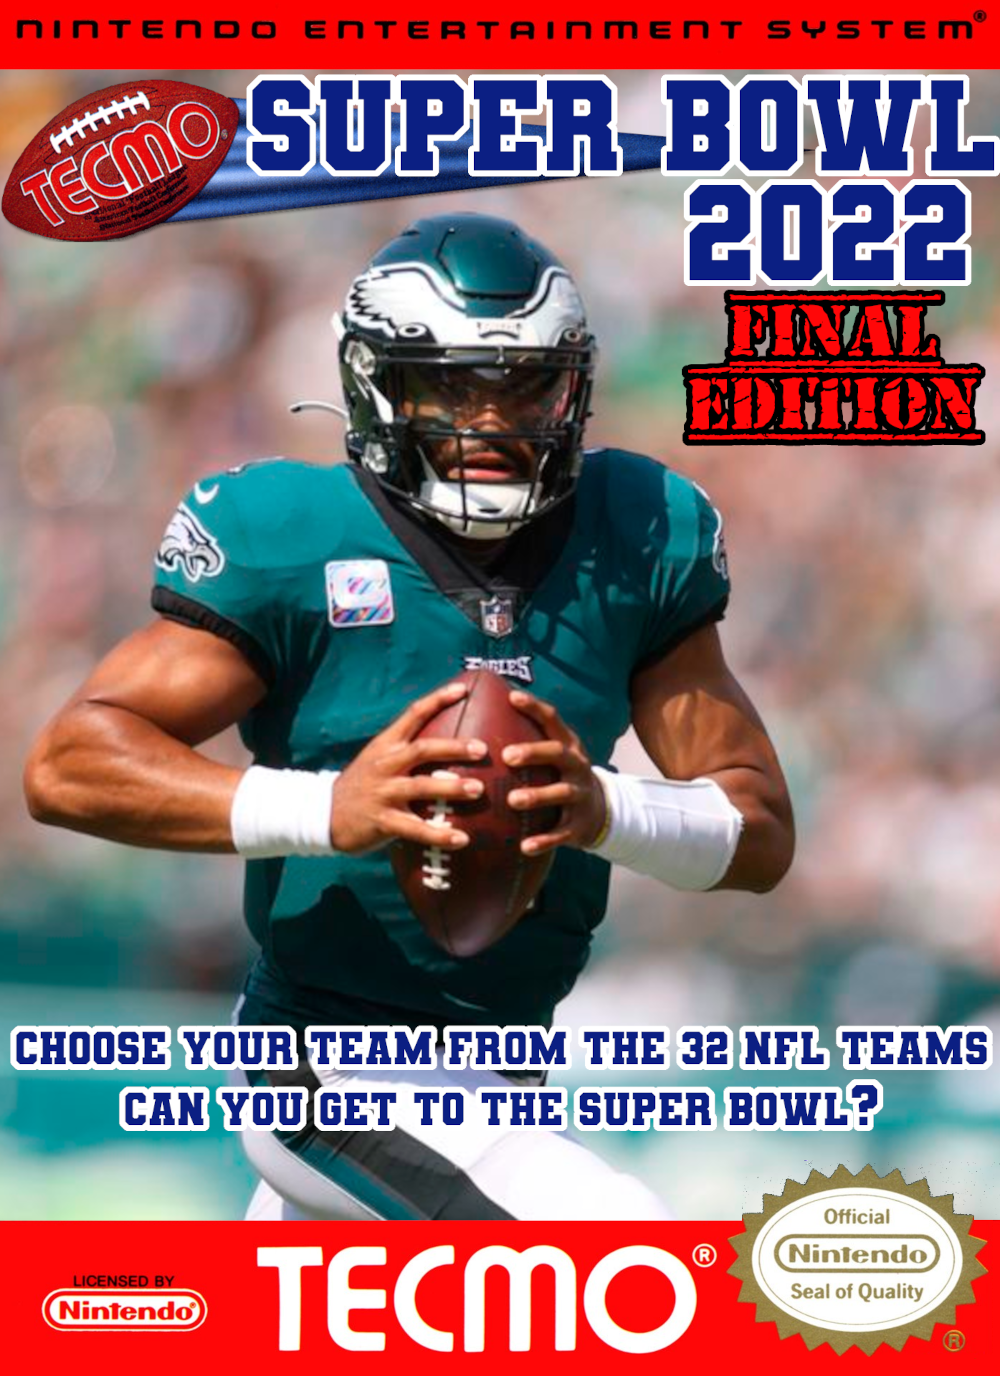 SBlueman's Tecmo Super Bowl 2022 - Final Edition - NFL By Year - TBORG